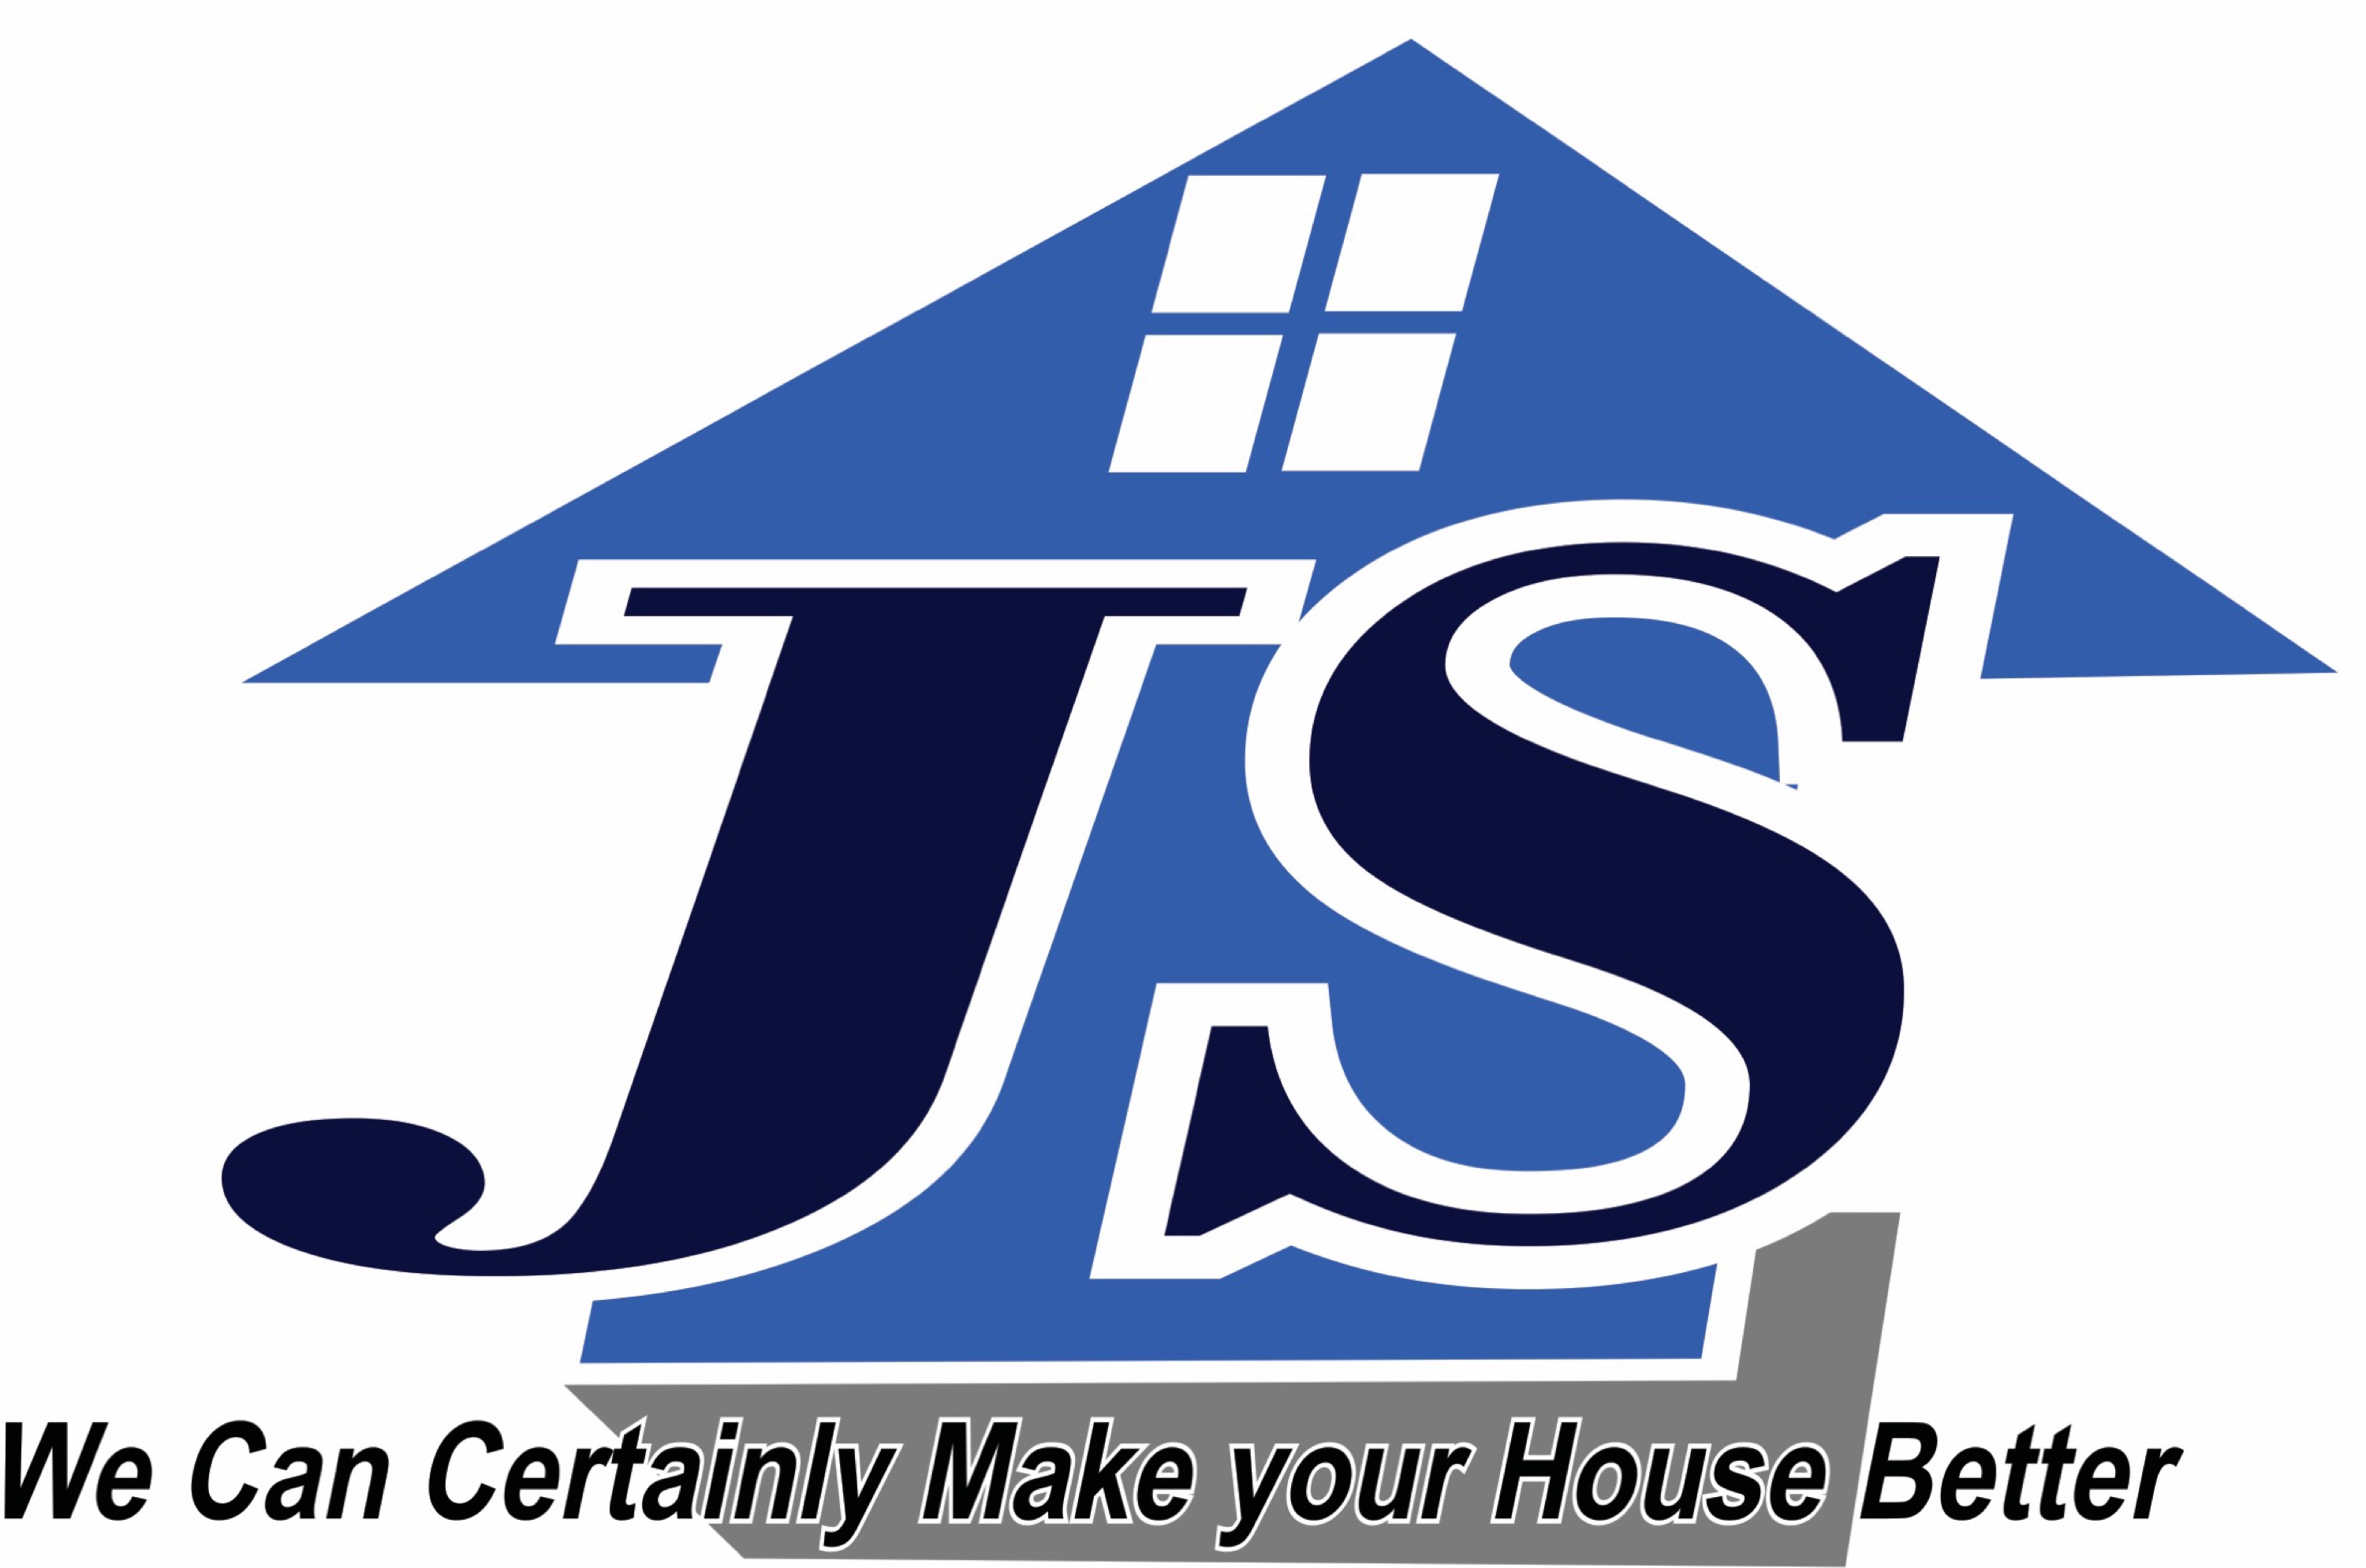 JS Home Improvement Services LLC Logo